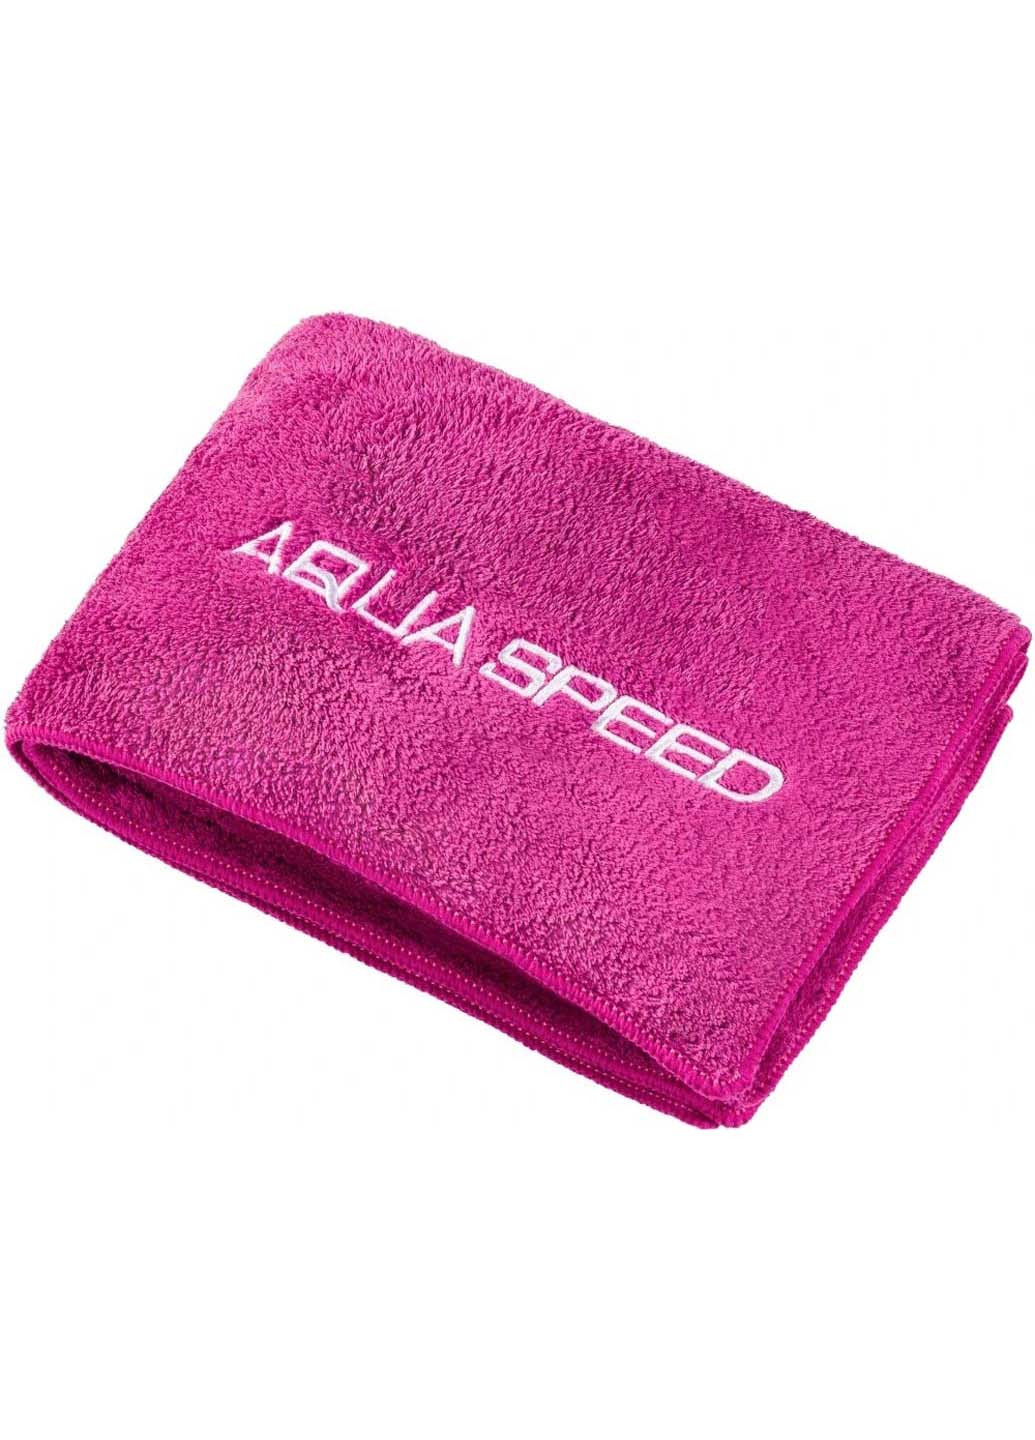 Aqua Speed рушник рожевий виробництво - Китай